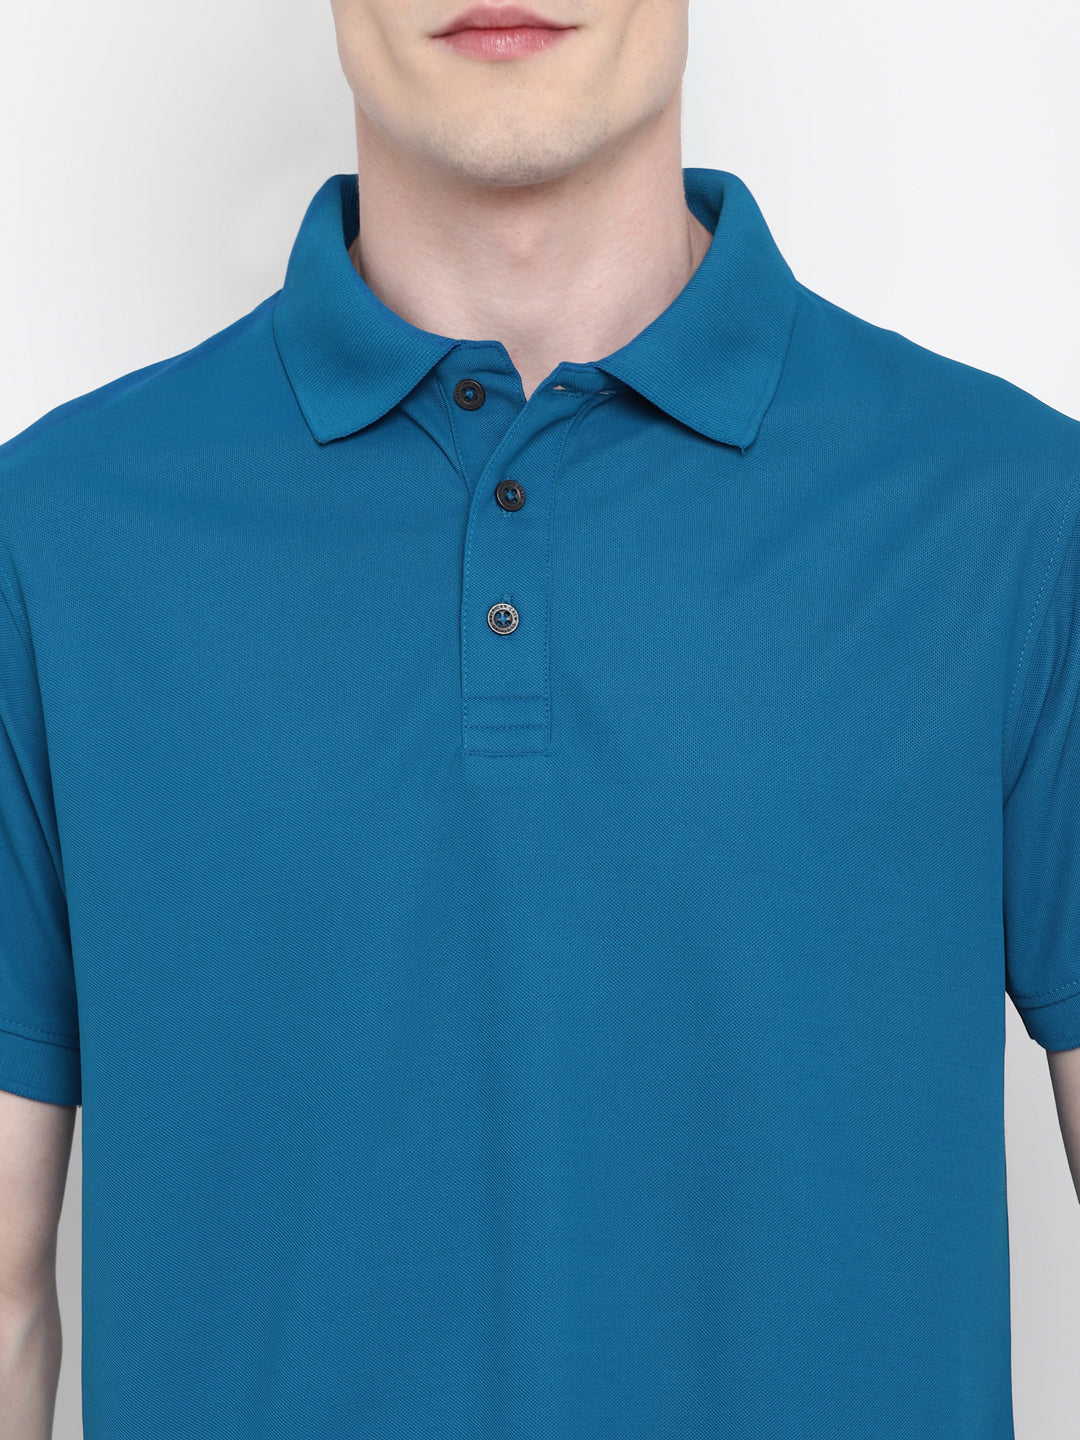 Kooltex Polo T-Shirt For Men - Blue